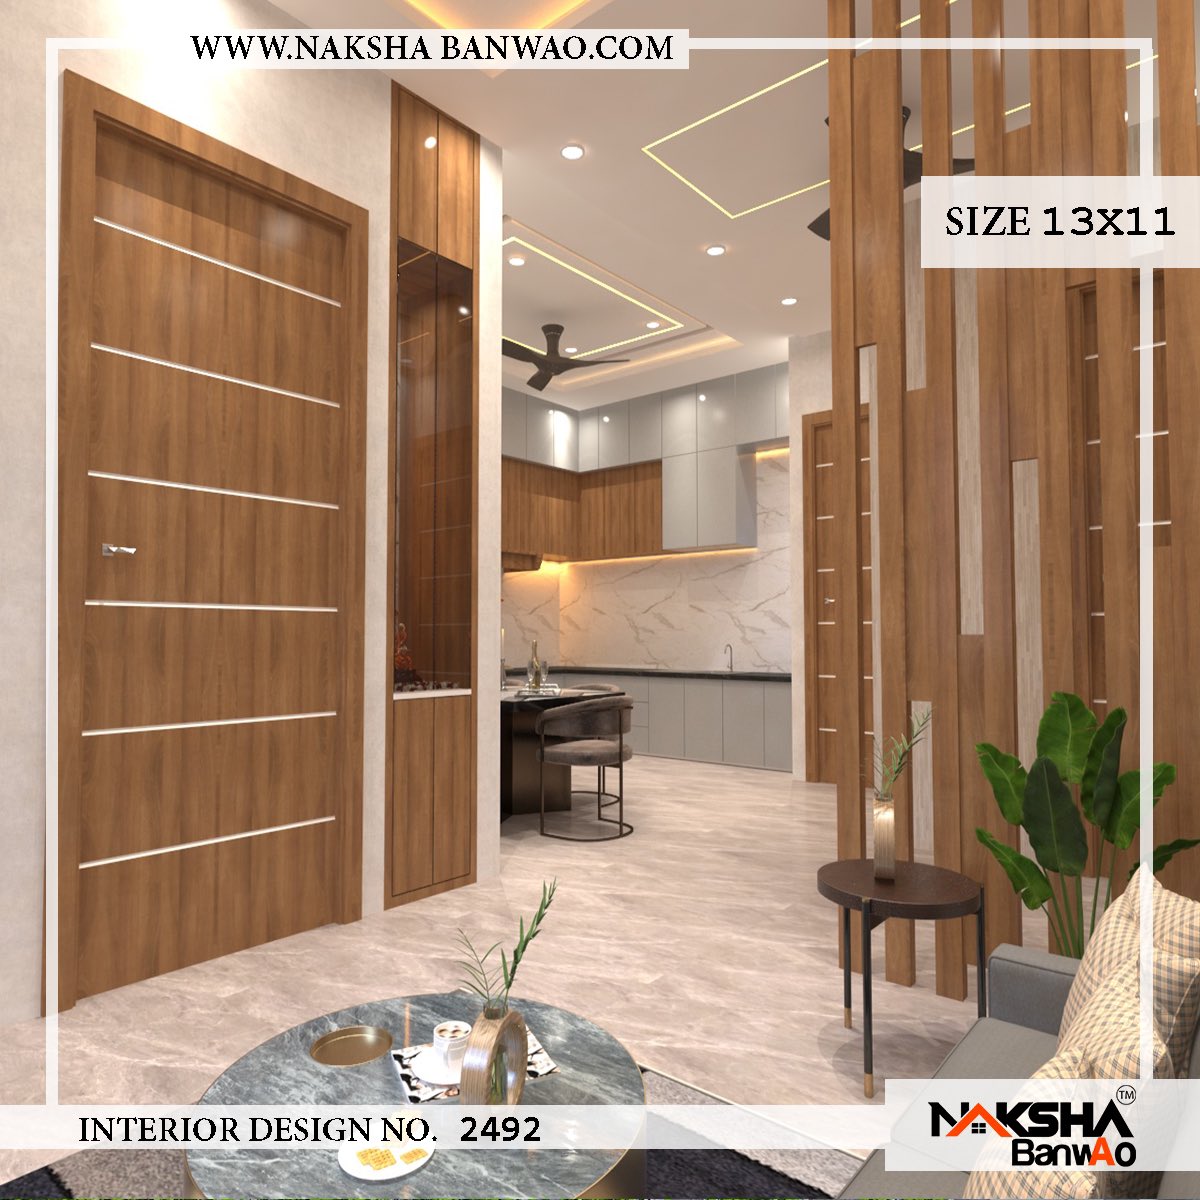 Modular kitchen &  Dining room ideas 2023.

#nakshabanwao #modularkitchen #diningroomideas #modernkitchendesign #bigbossott2 #bigbosshouse